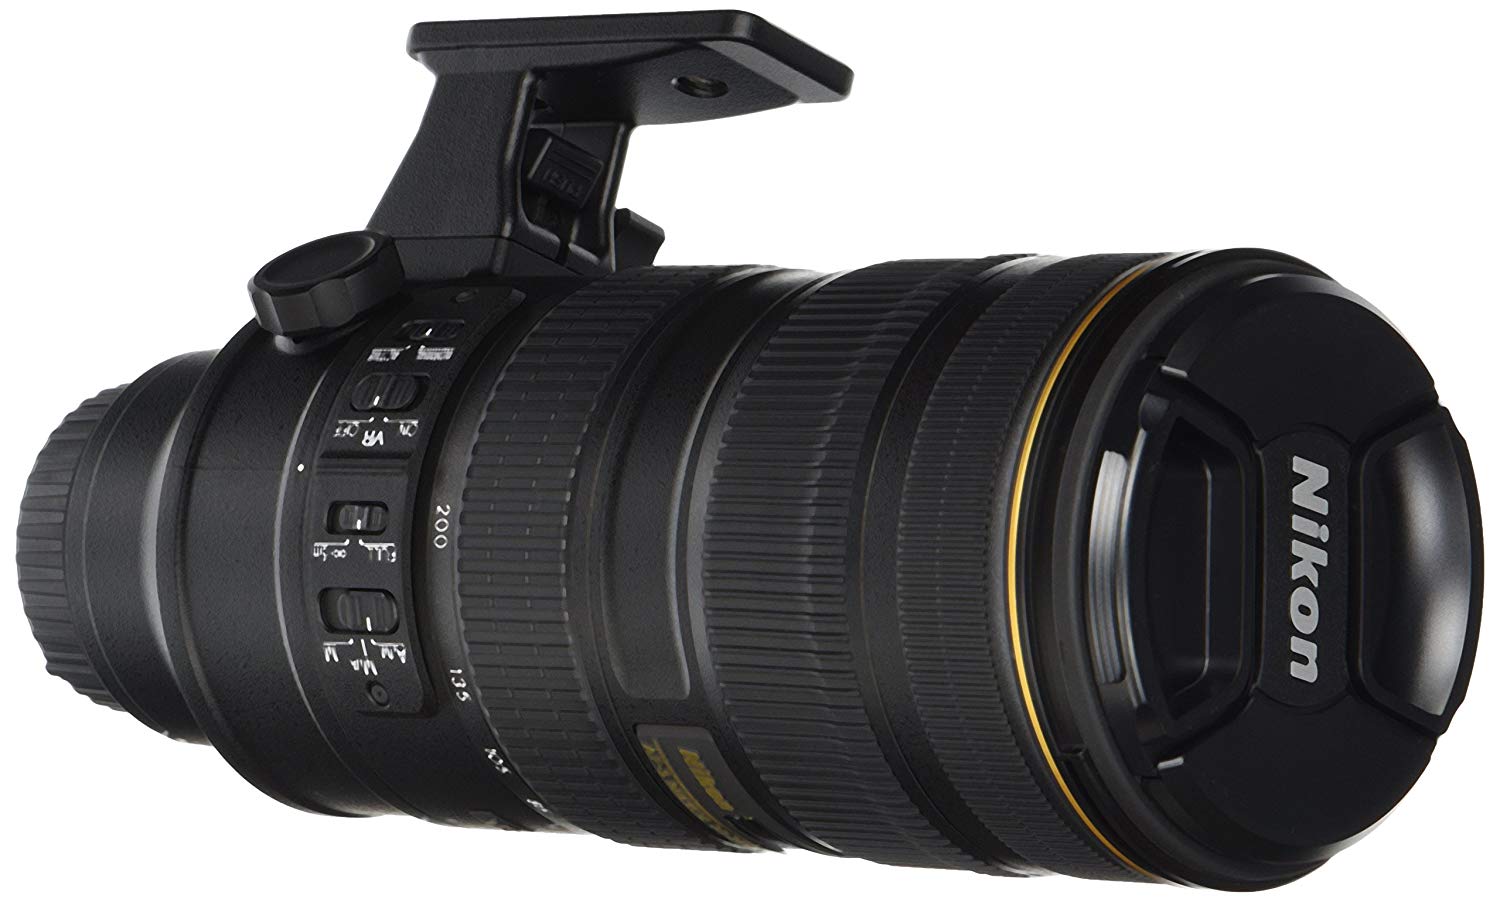 Nikon 70-200mm f/2.8G ED VR II Nikkor Lens + Amazing Accessory Kit (Special International Model) Bundle